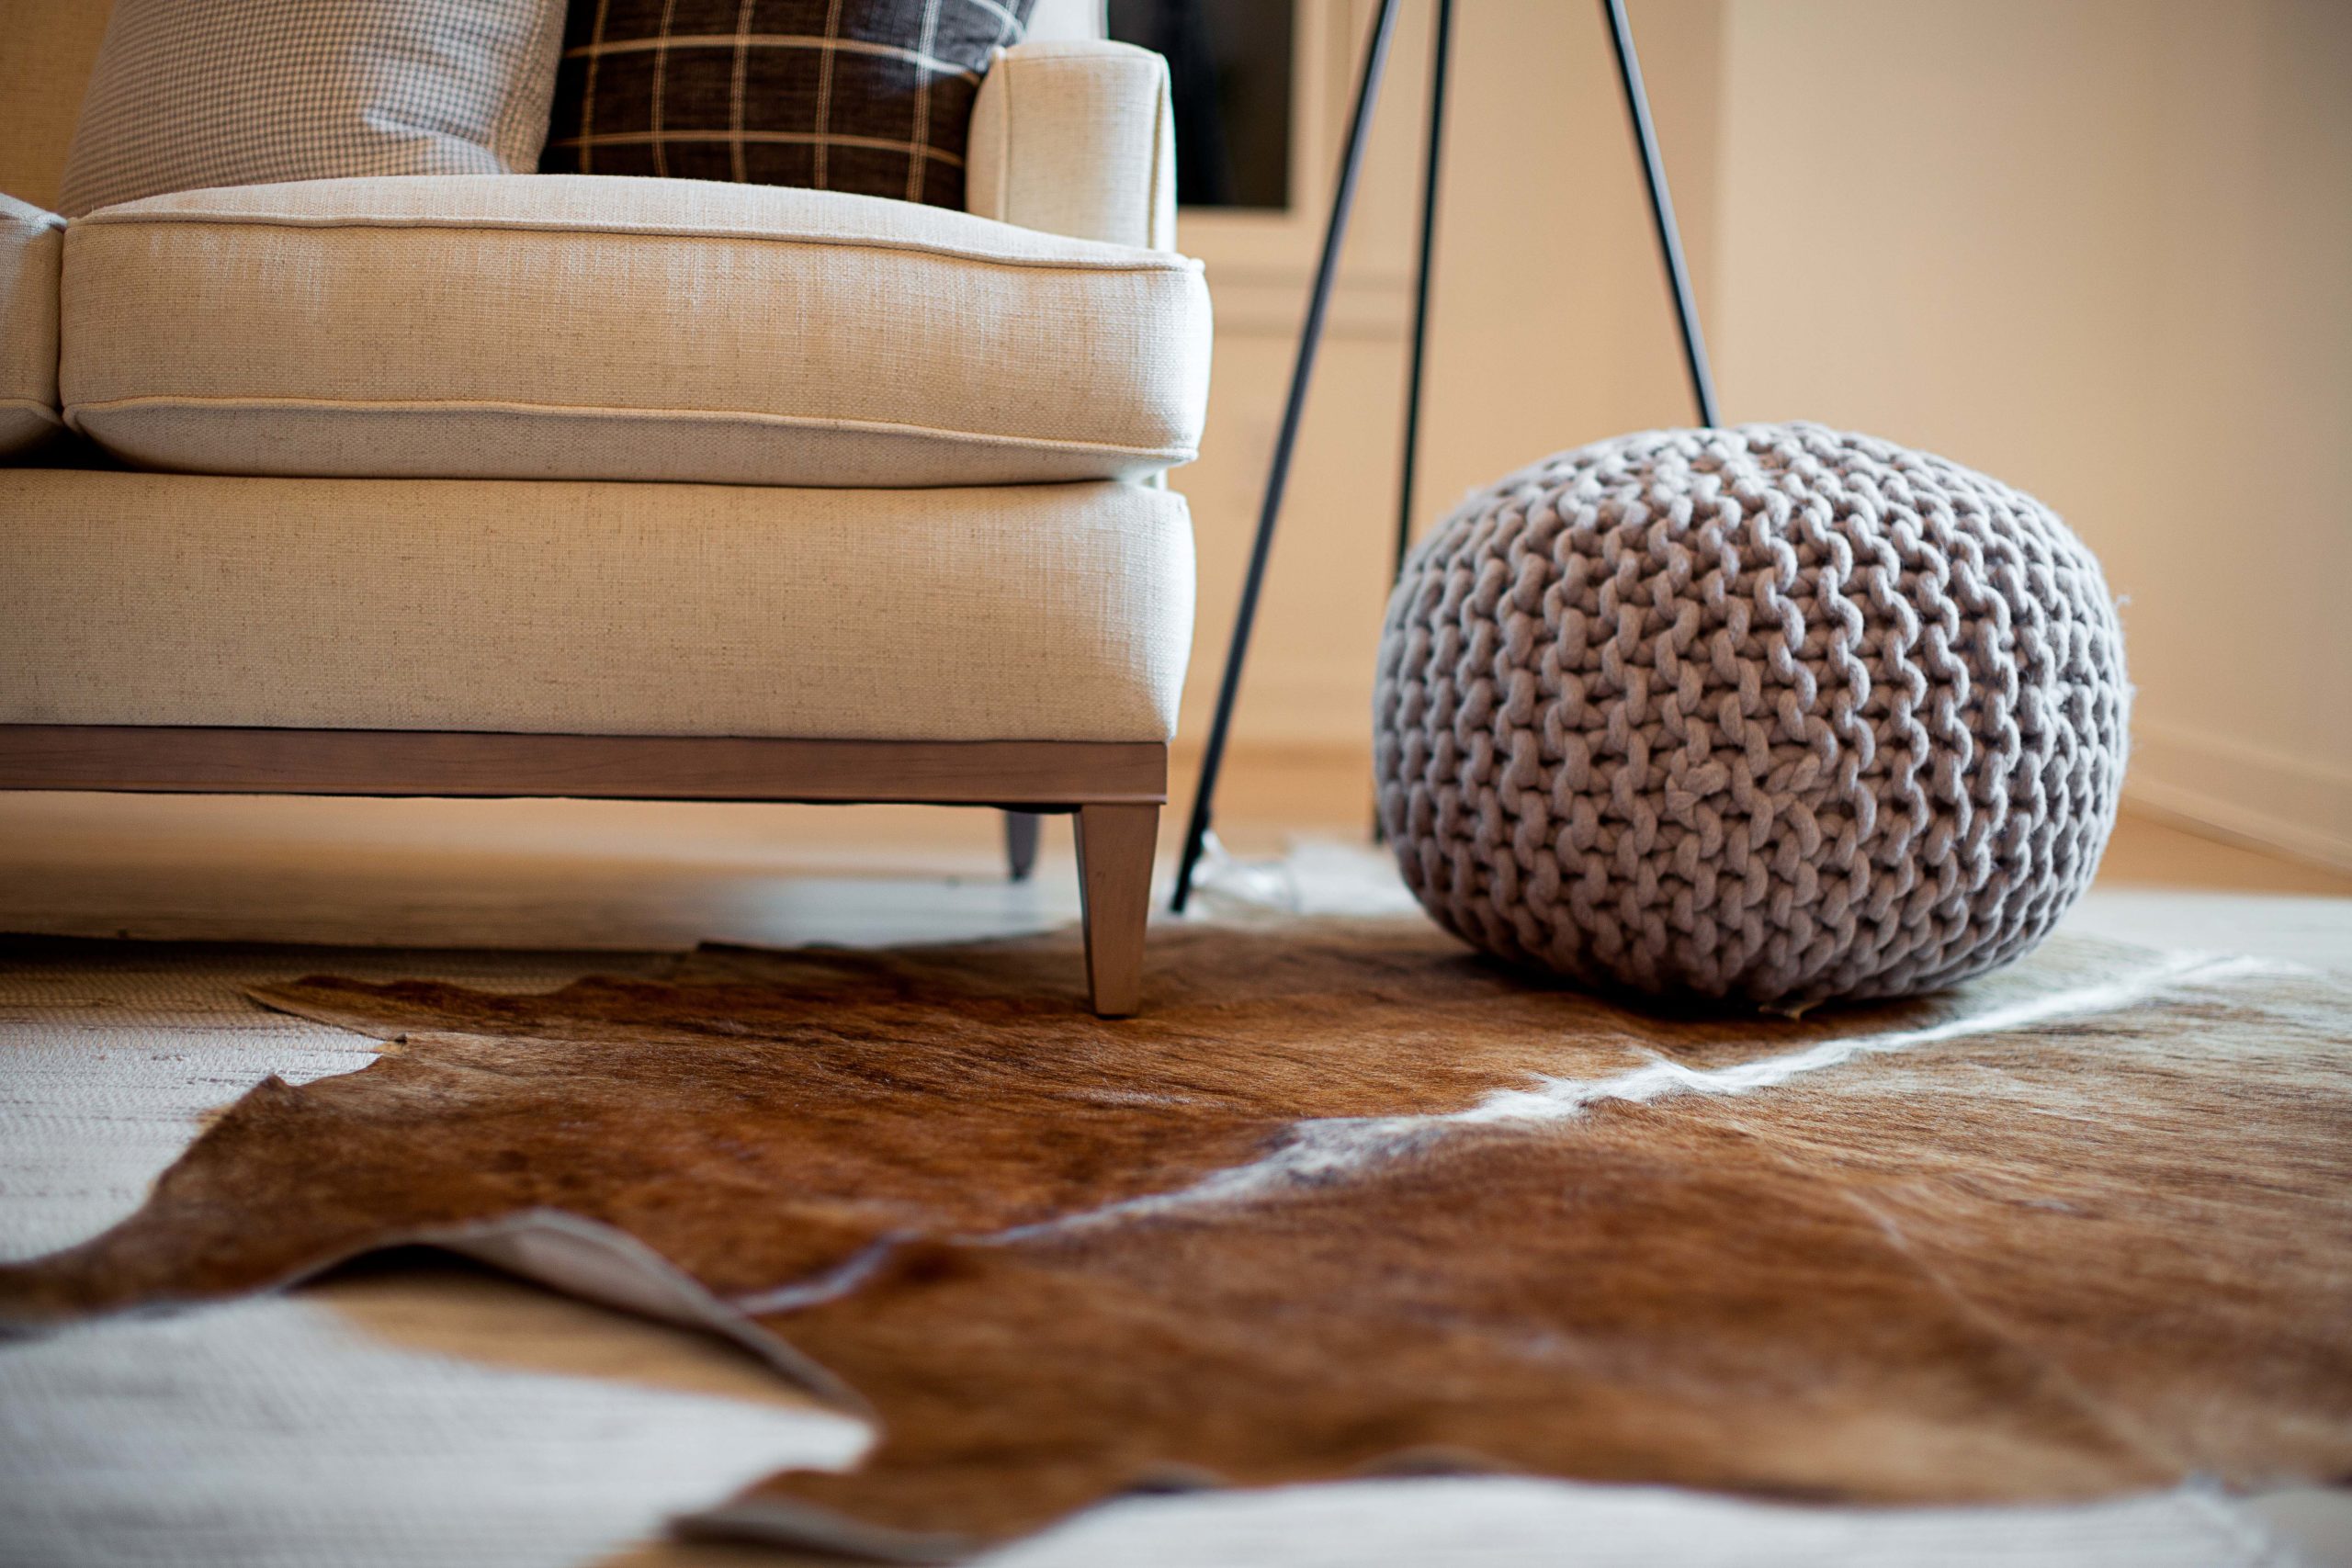 Decorative animal skin rug in living space.